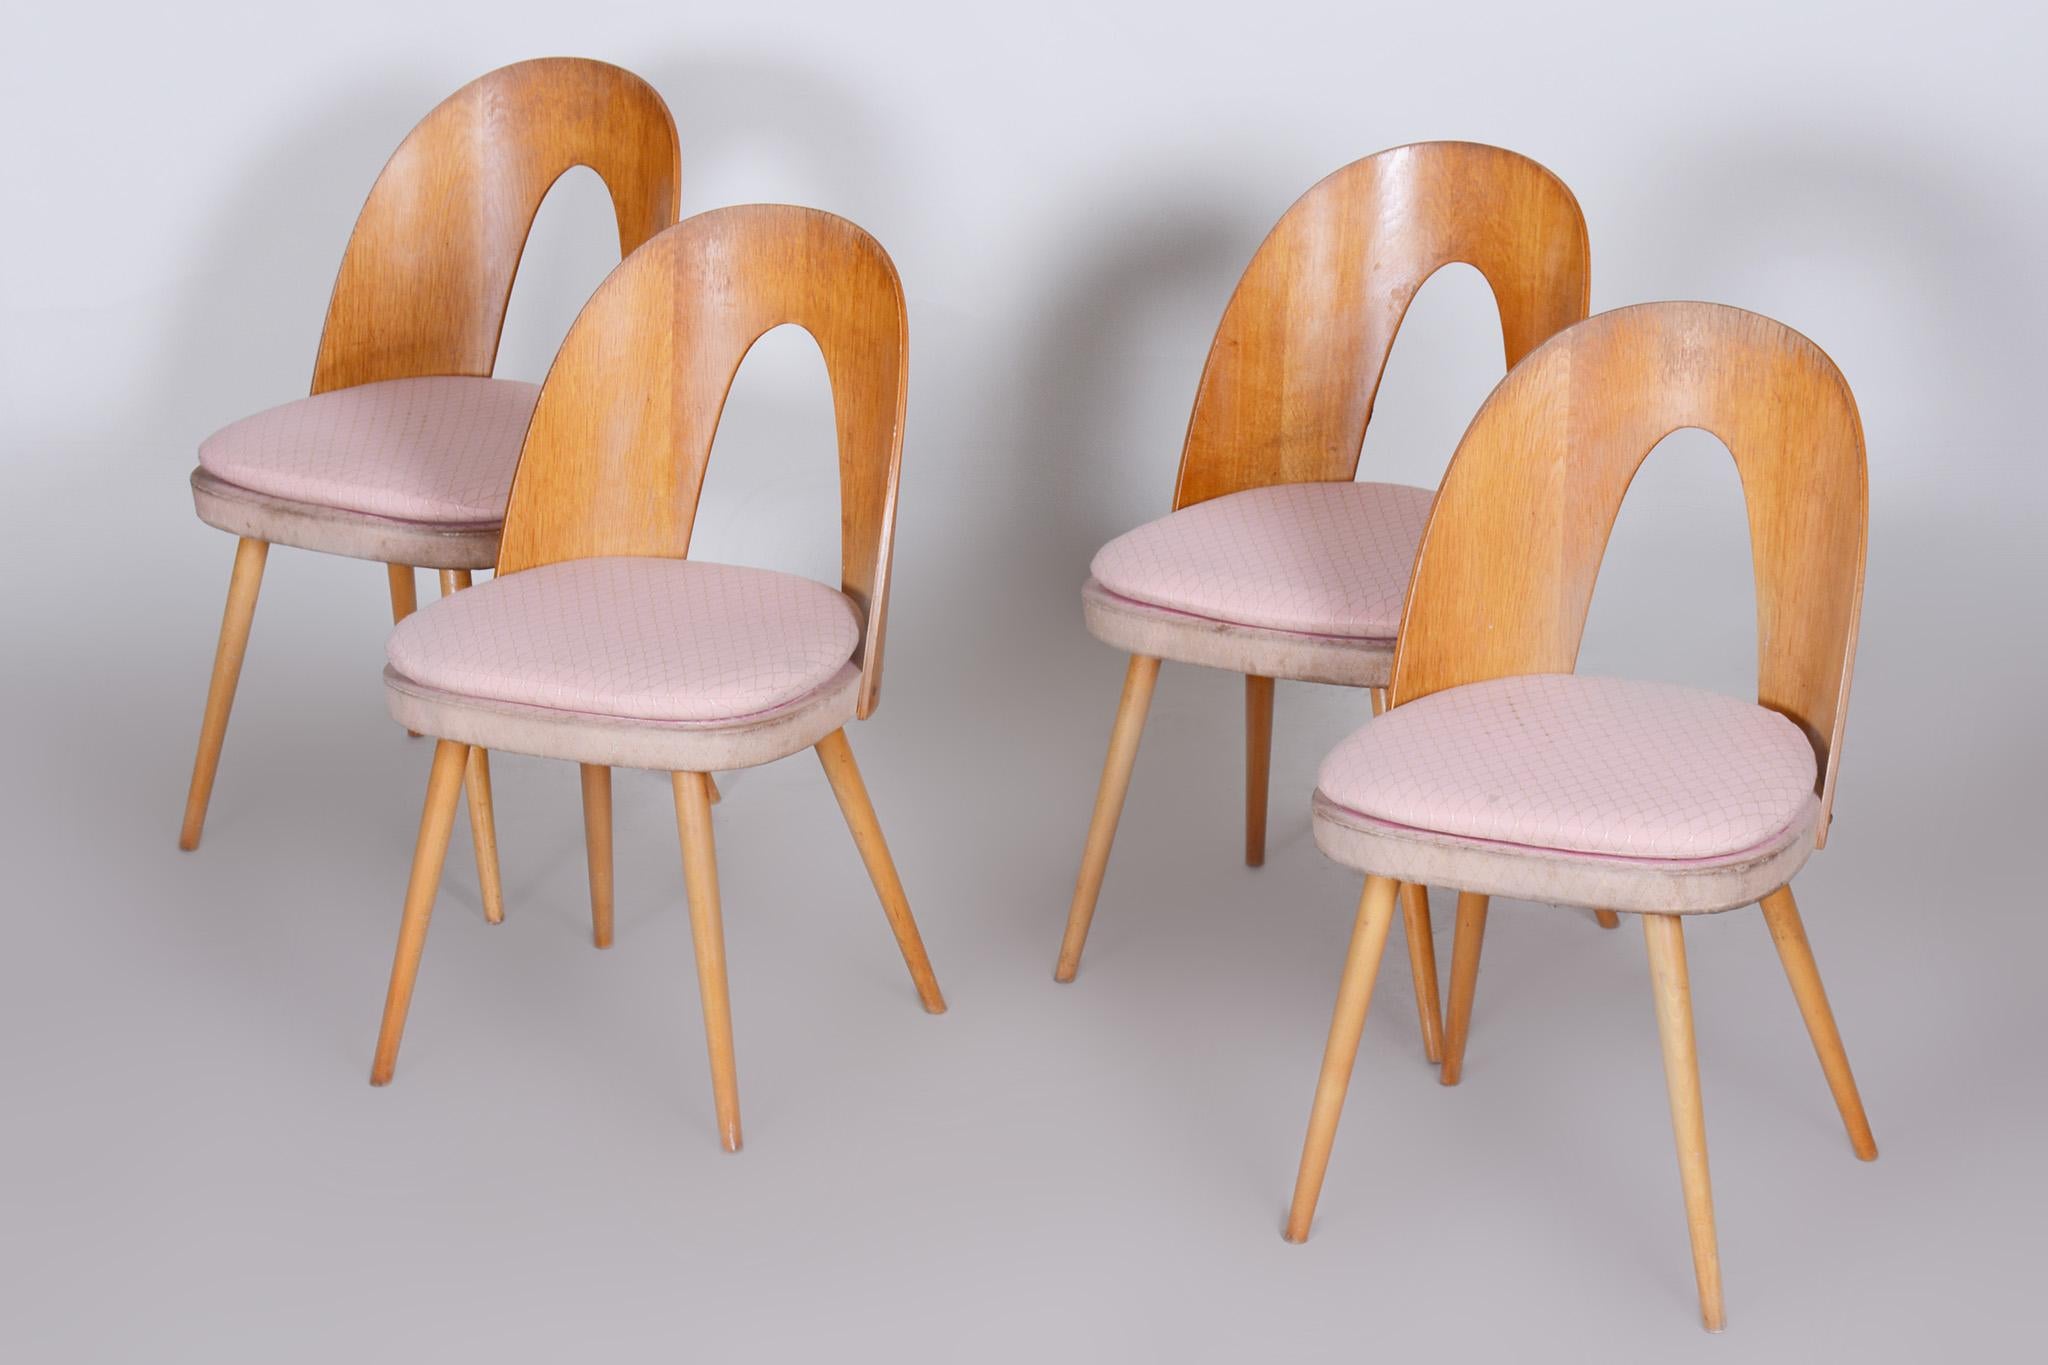 Fabric Set of Four Mid-Century Modern Chairs Made in 1950s Czechia by Antonín Šuman